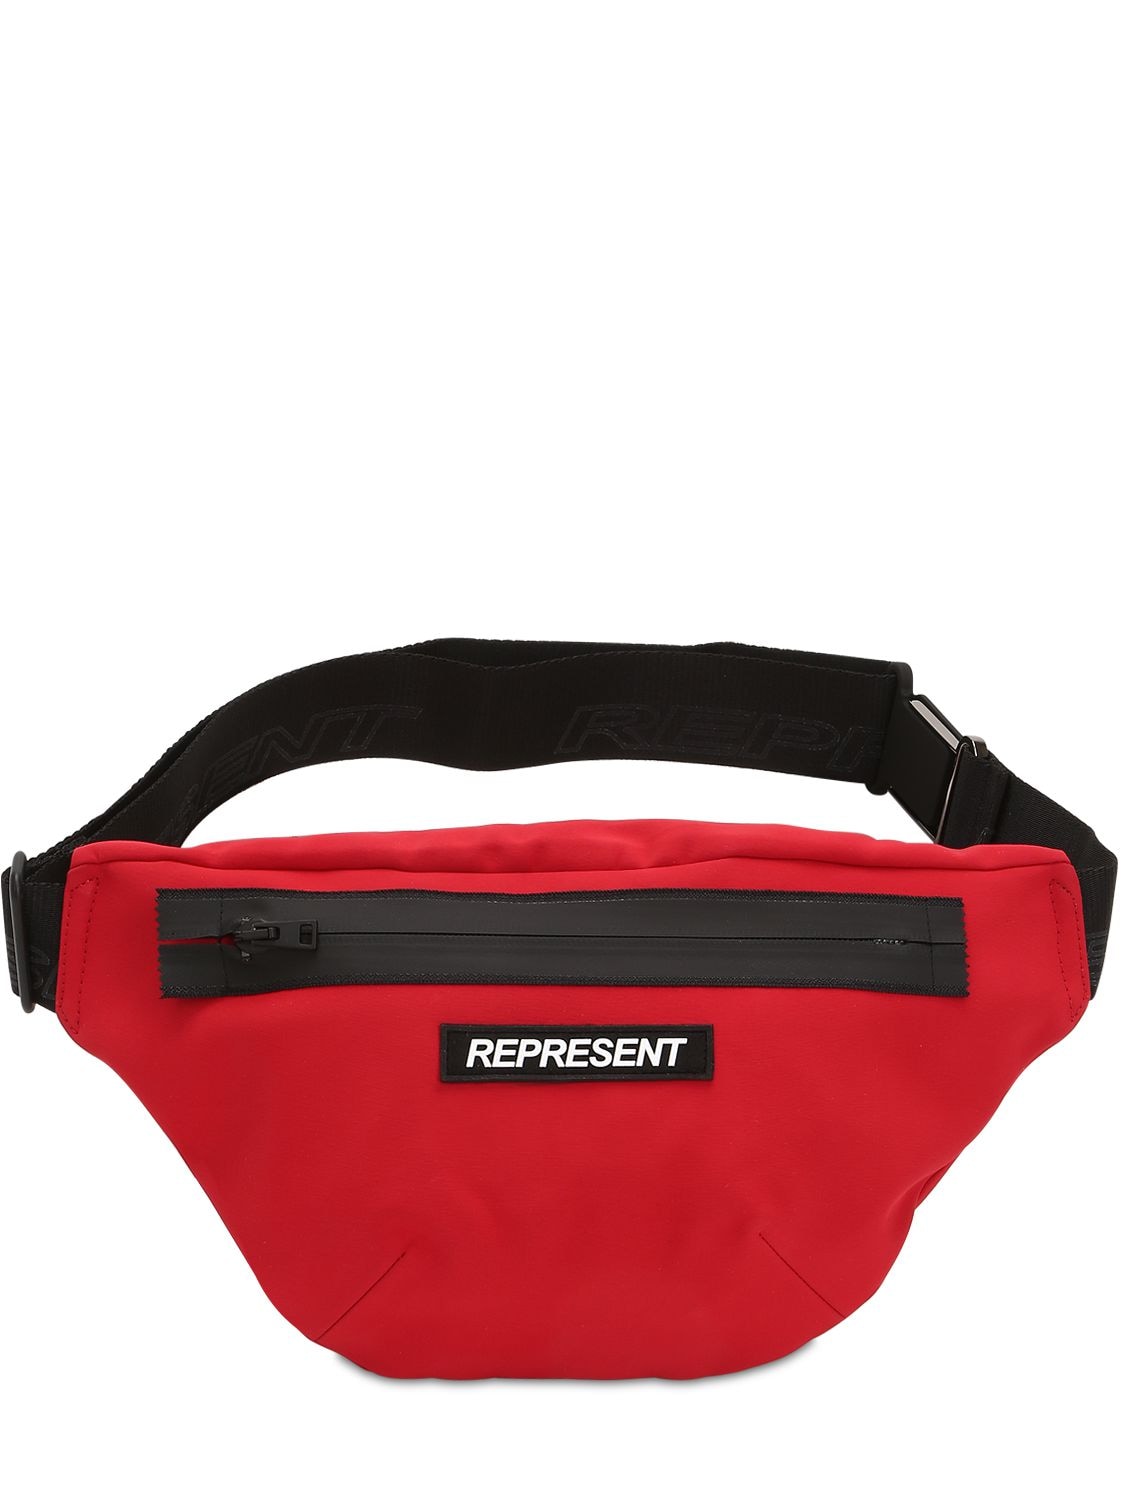 Represent Belt Pack In Red